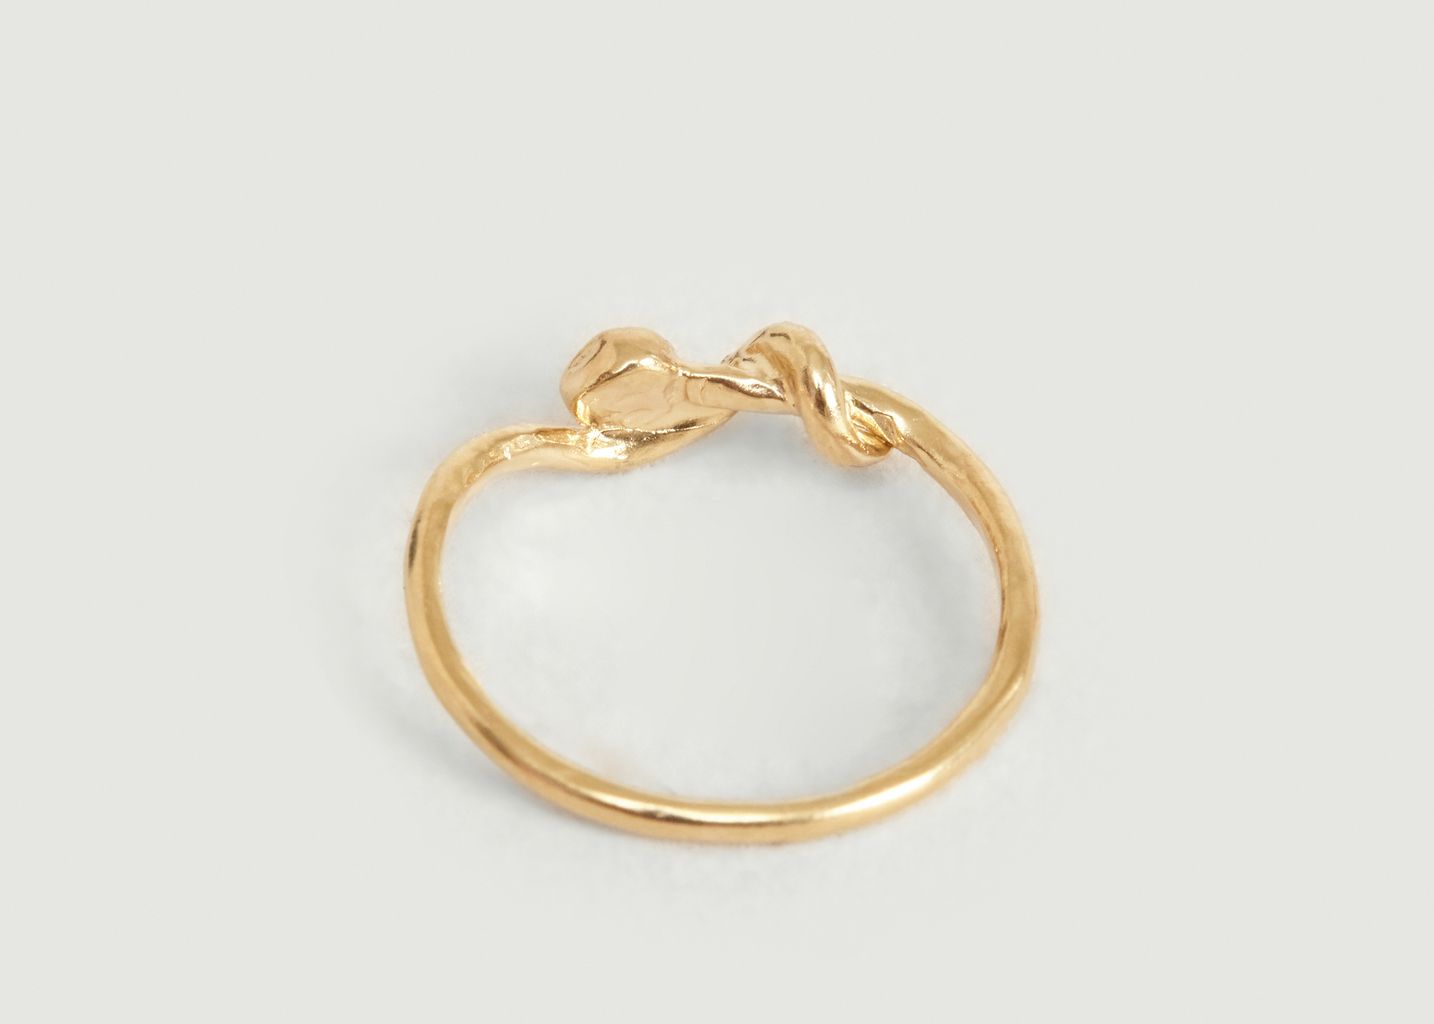 Illy Sertie vermeil ring with semi-precious stones - Monsieur